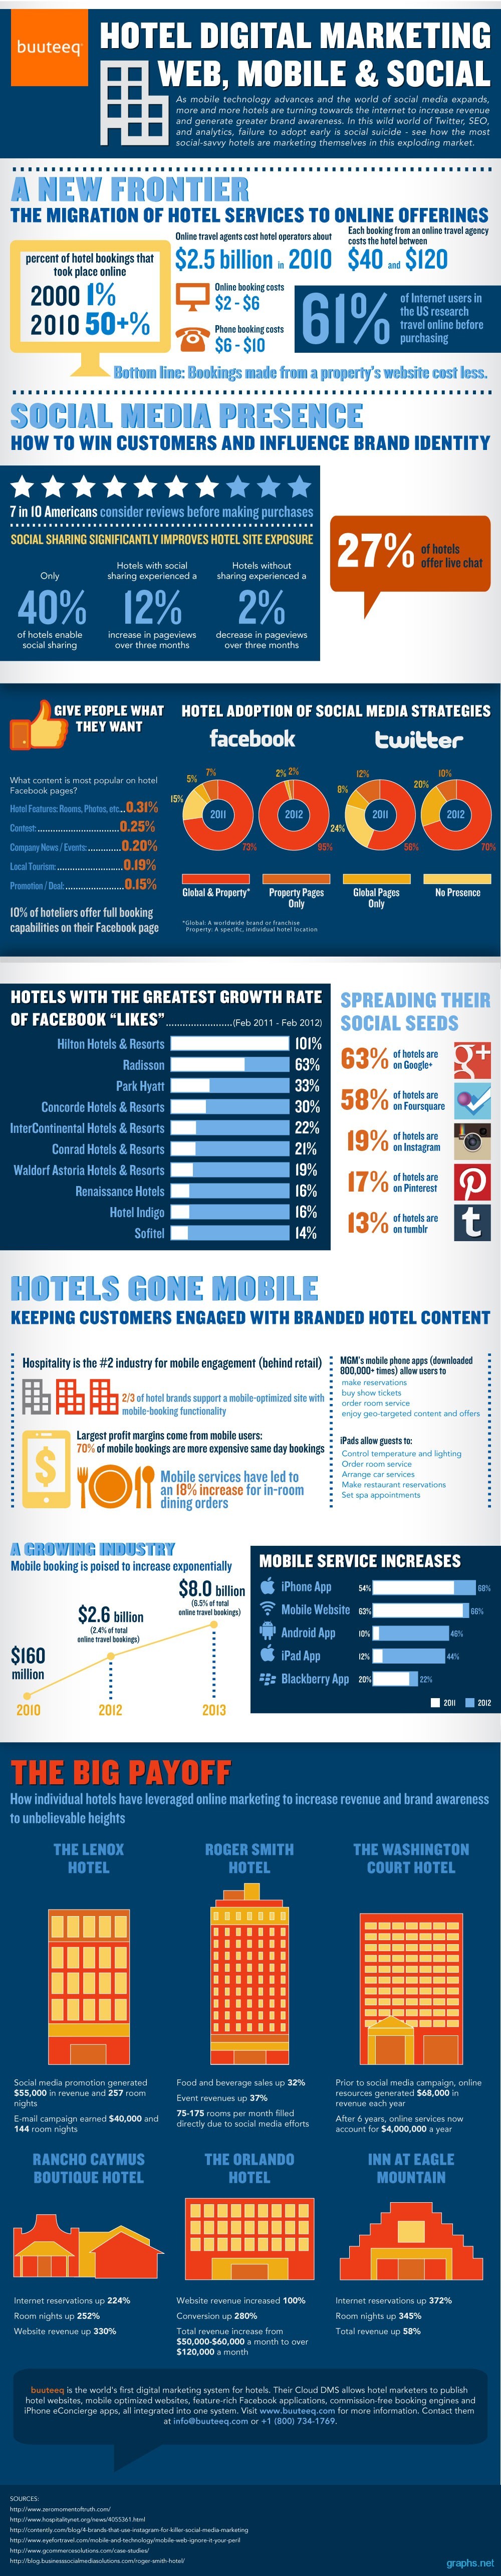 Hotel Marketing Strategies infographic